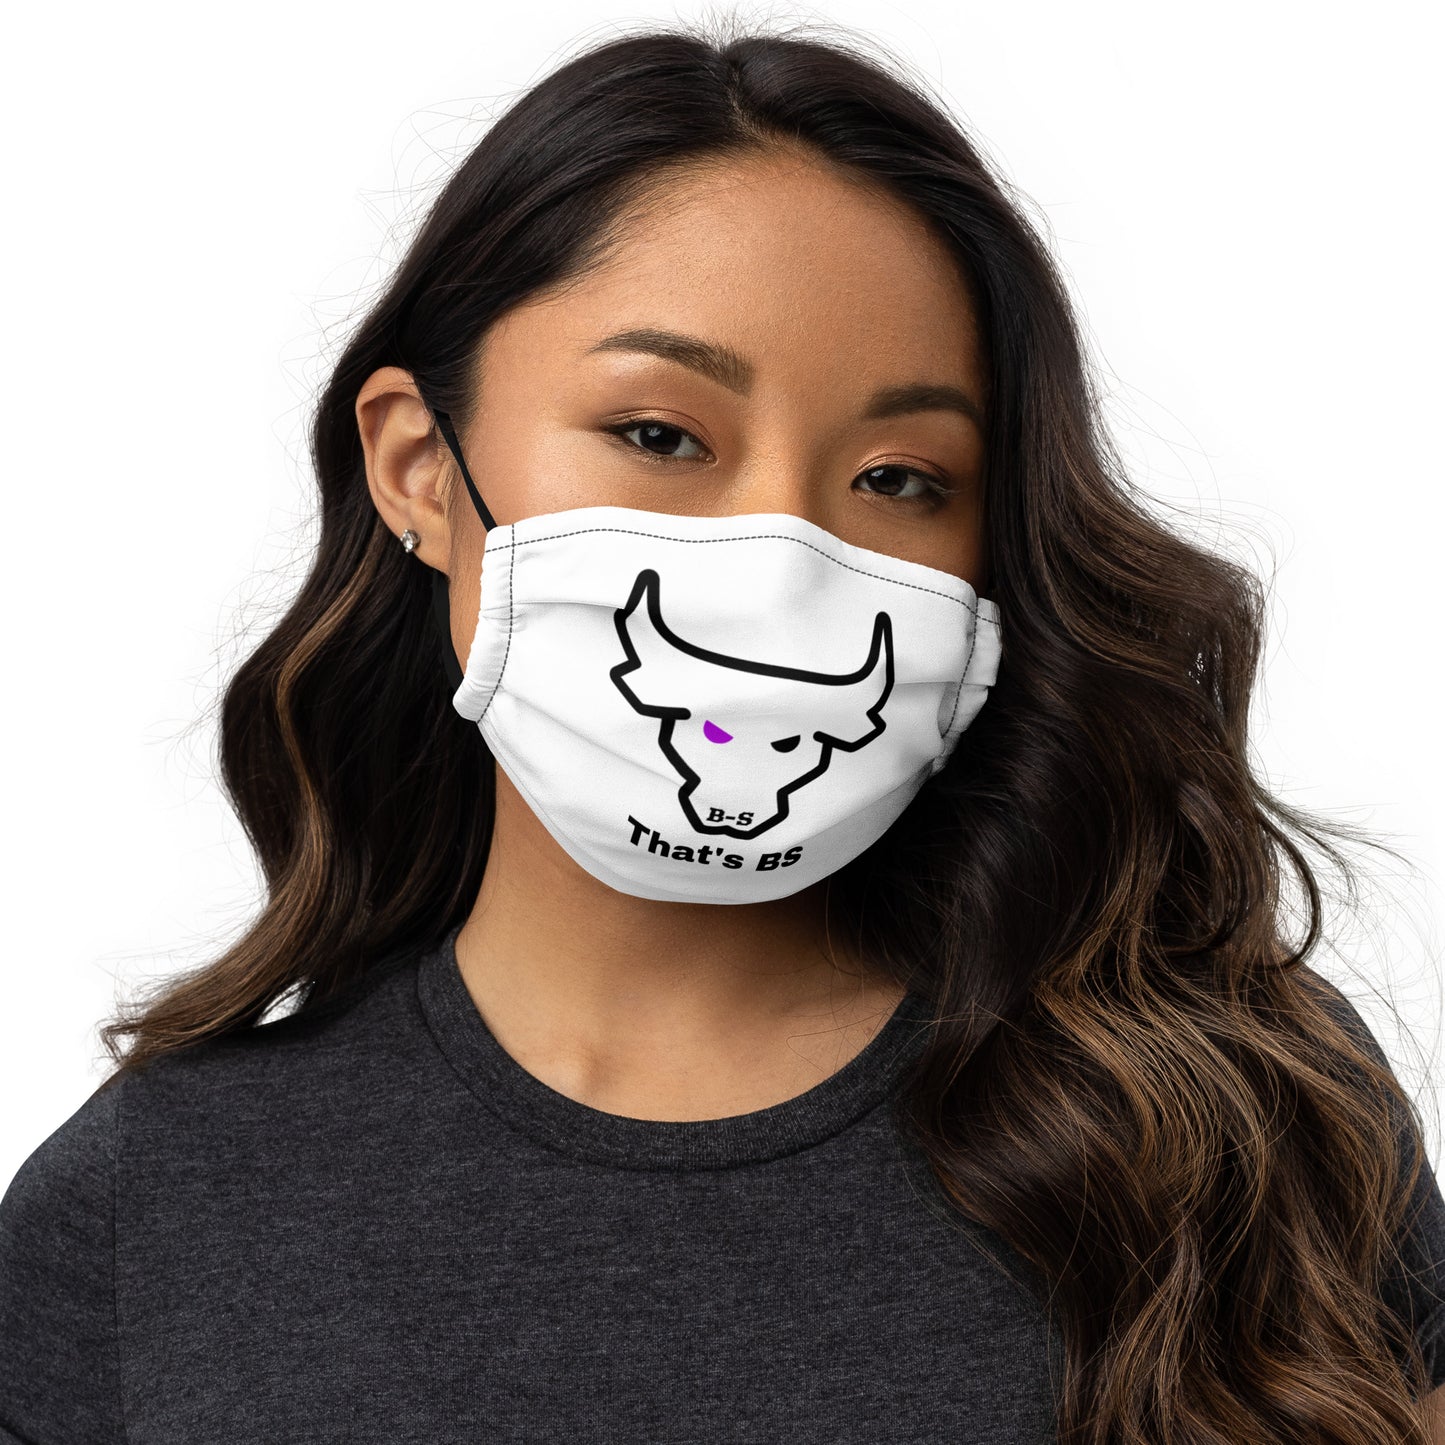 A Premium Quality Face Mask